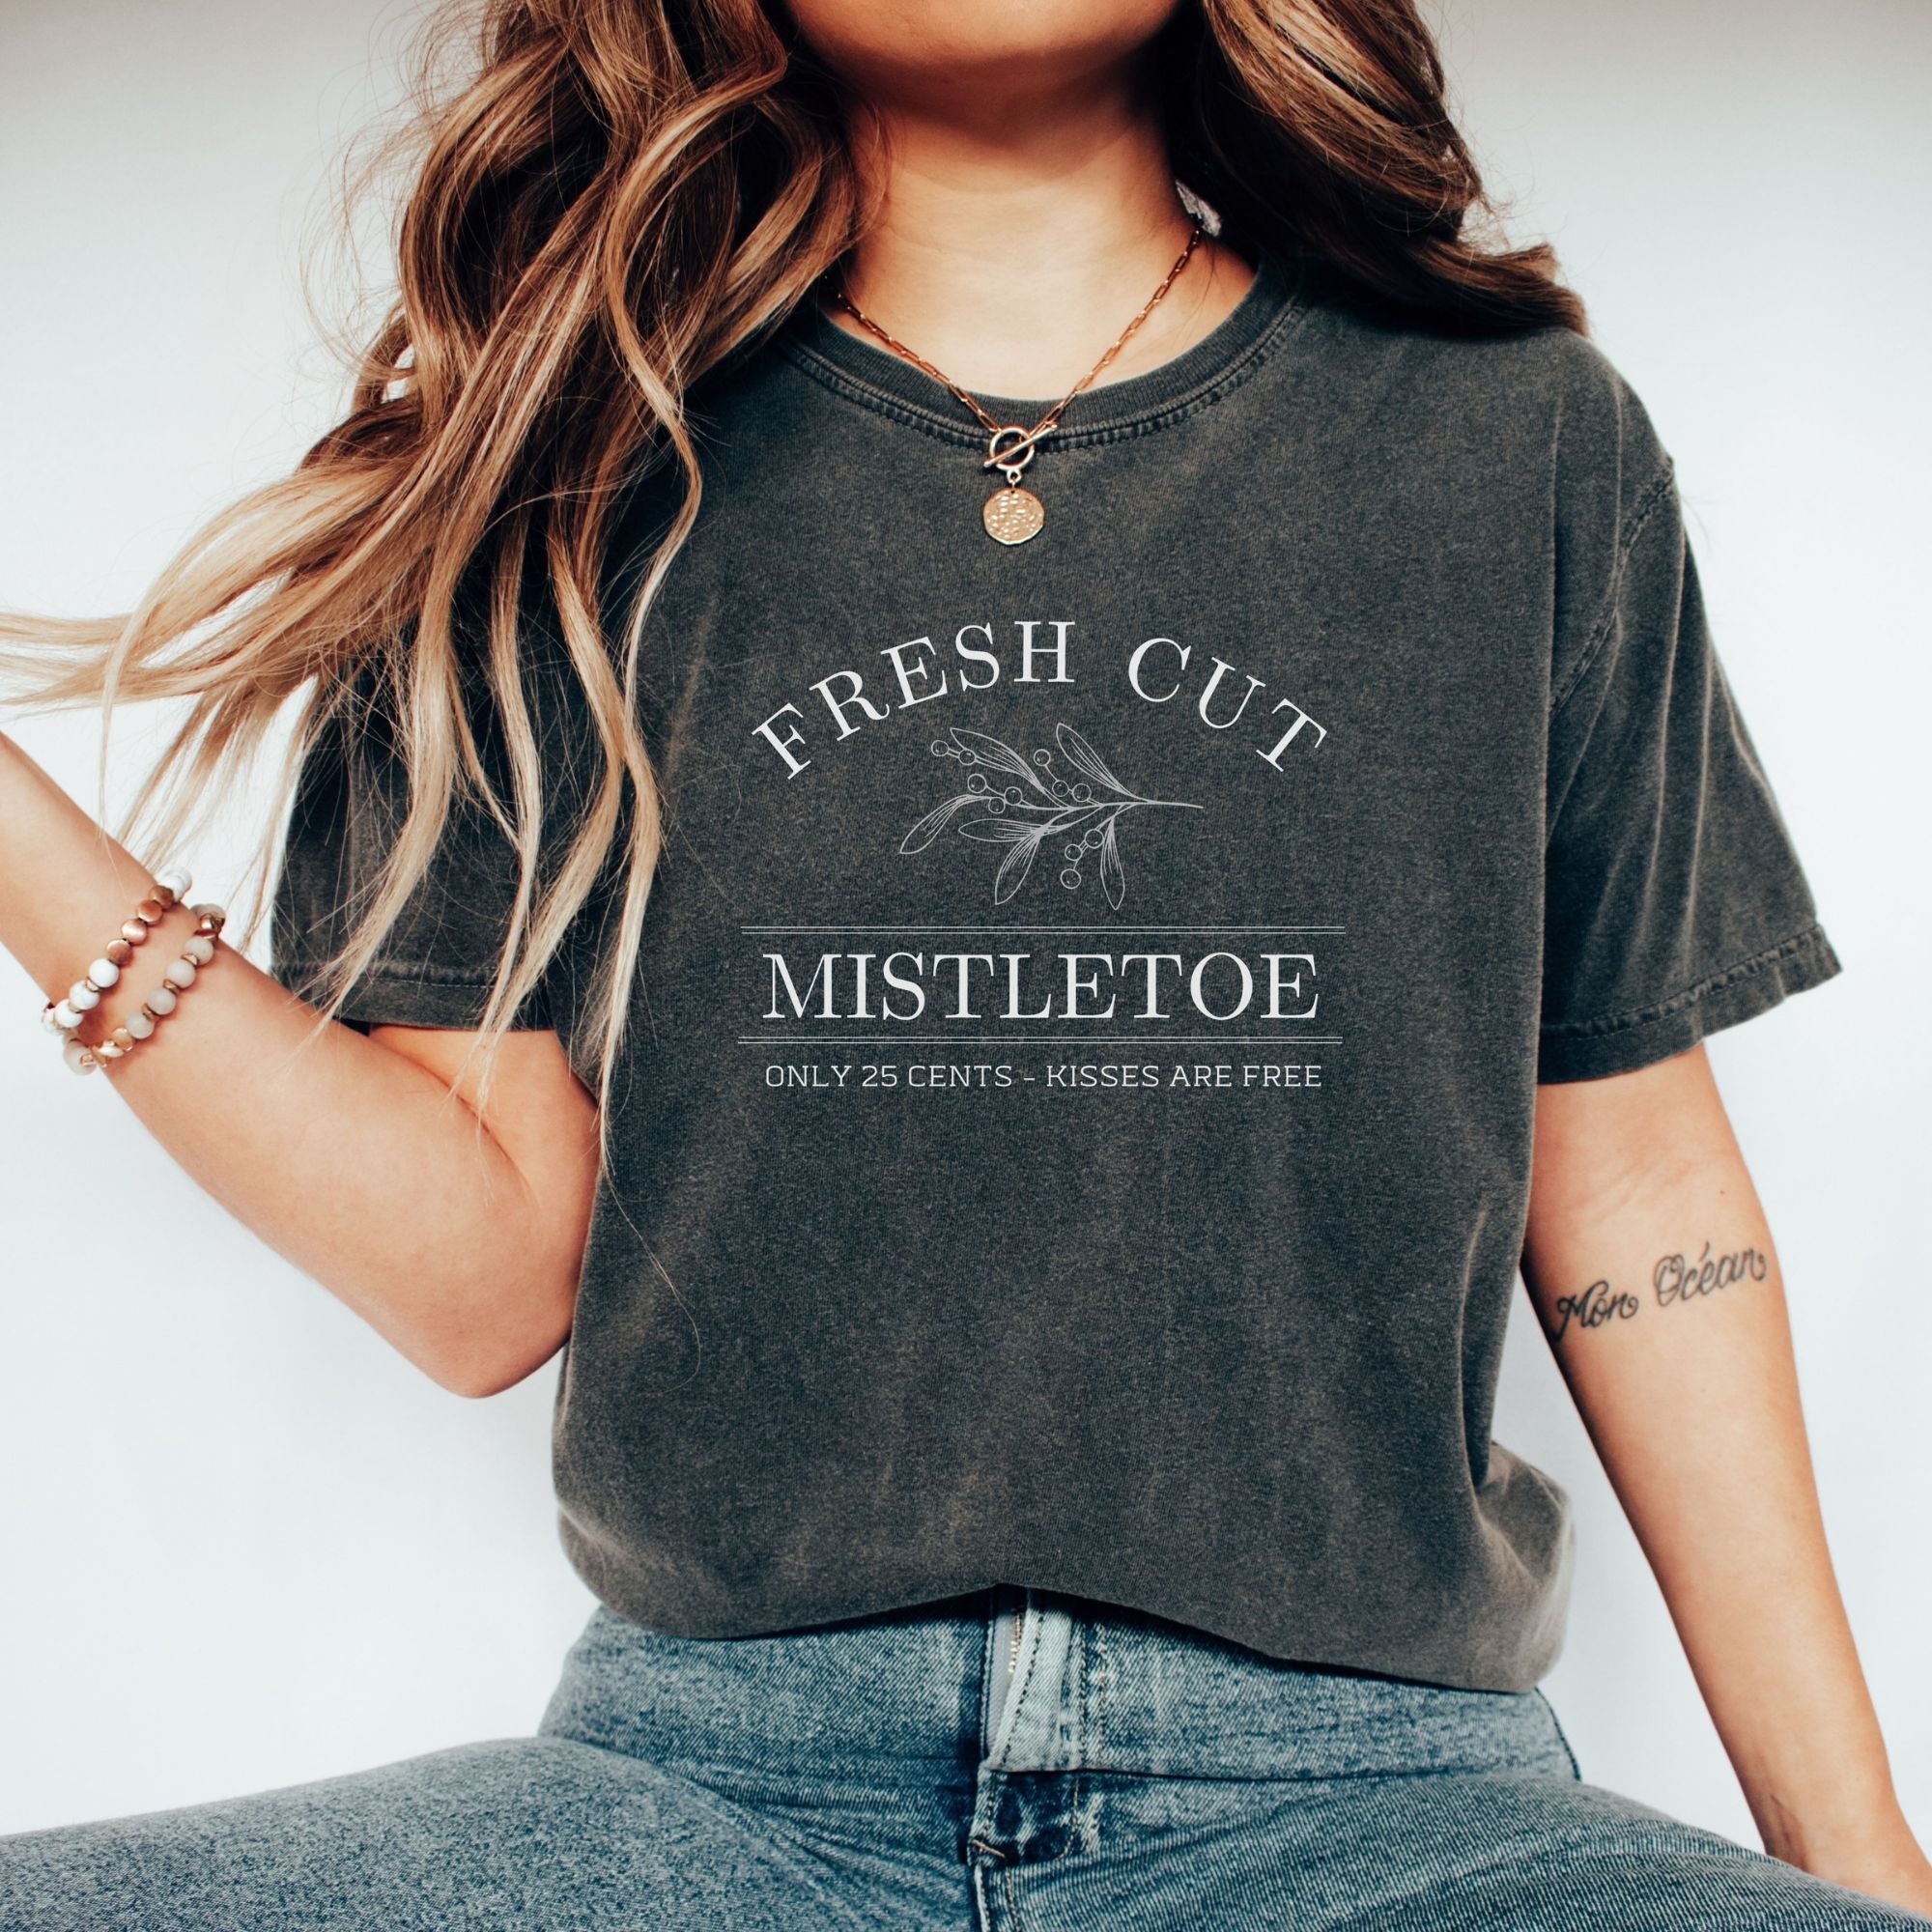 Nostalgic dark grey tshirt reading Fresh Cut Mistletoe Only 25 cents kisses are free